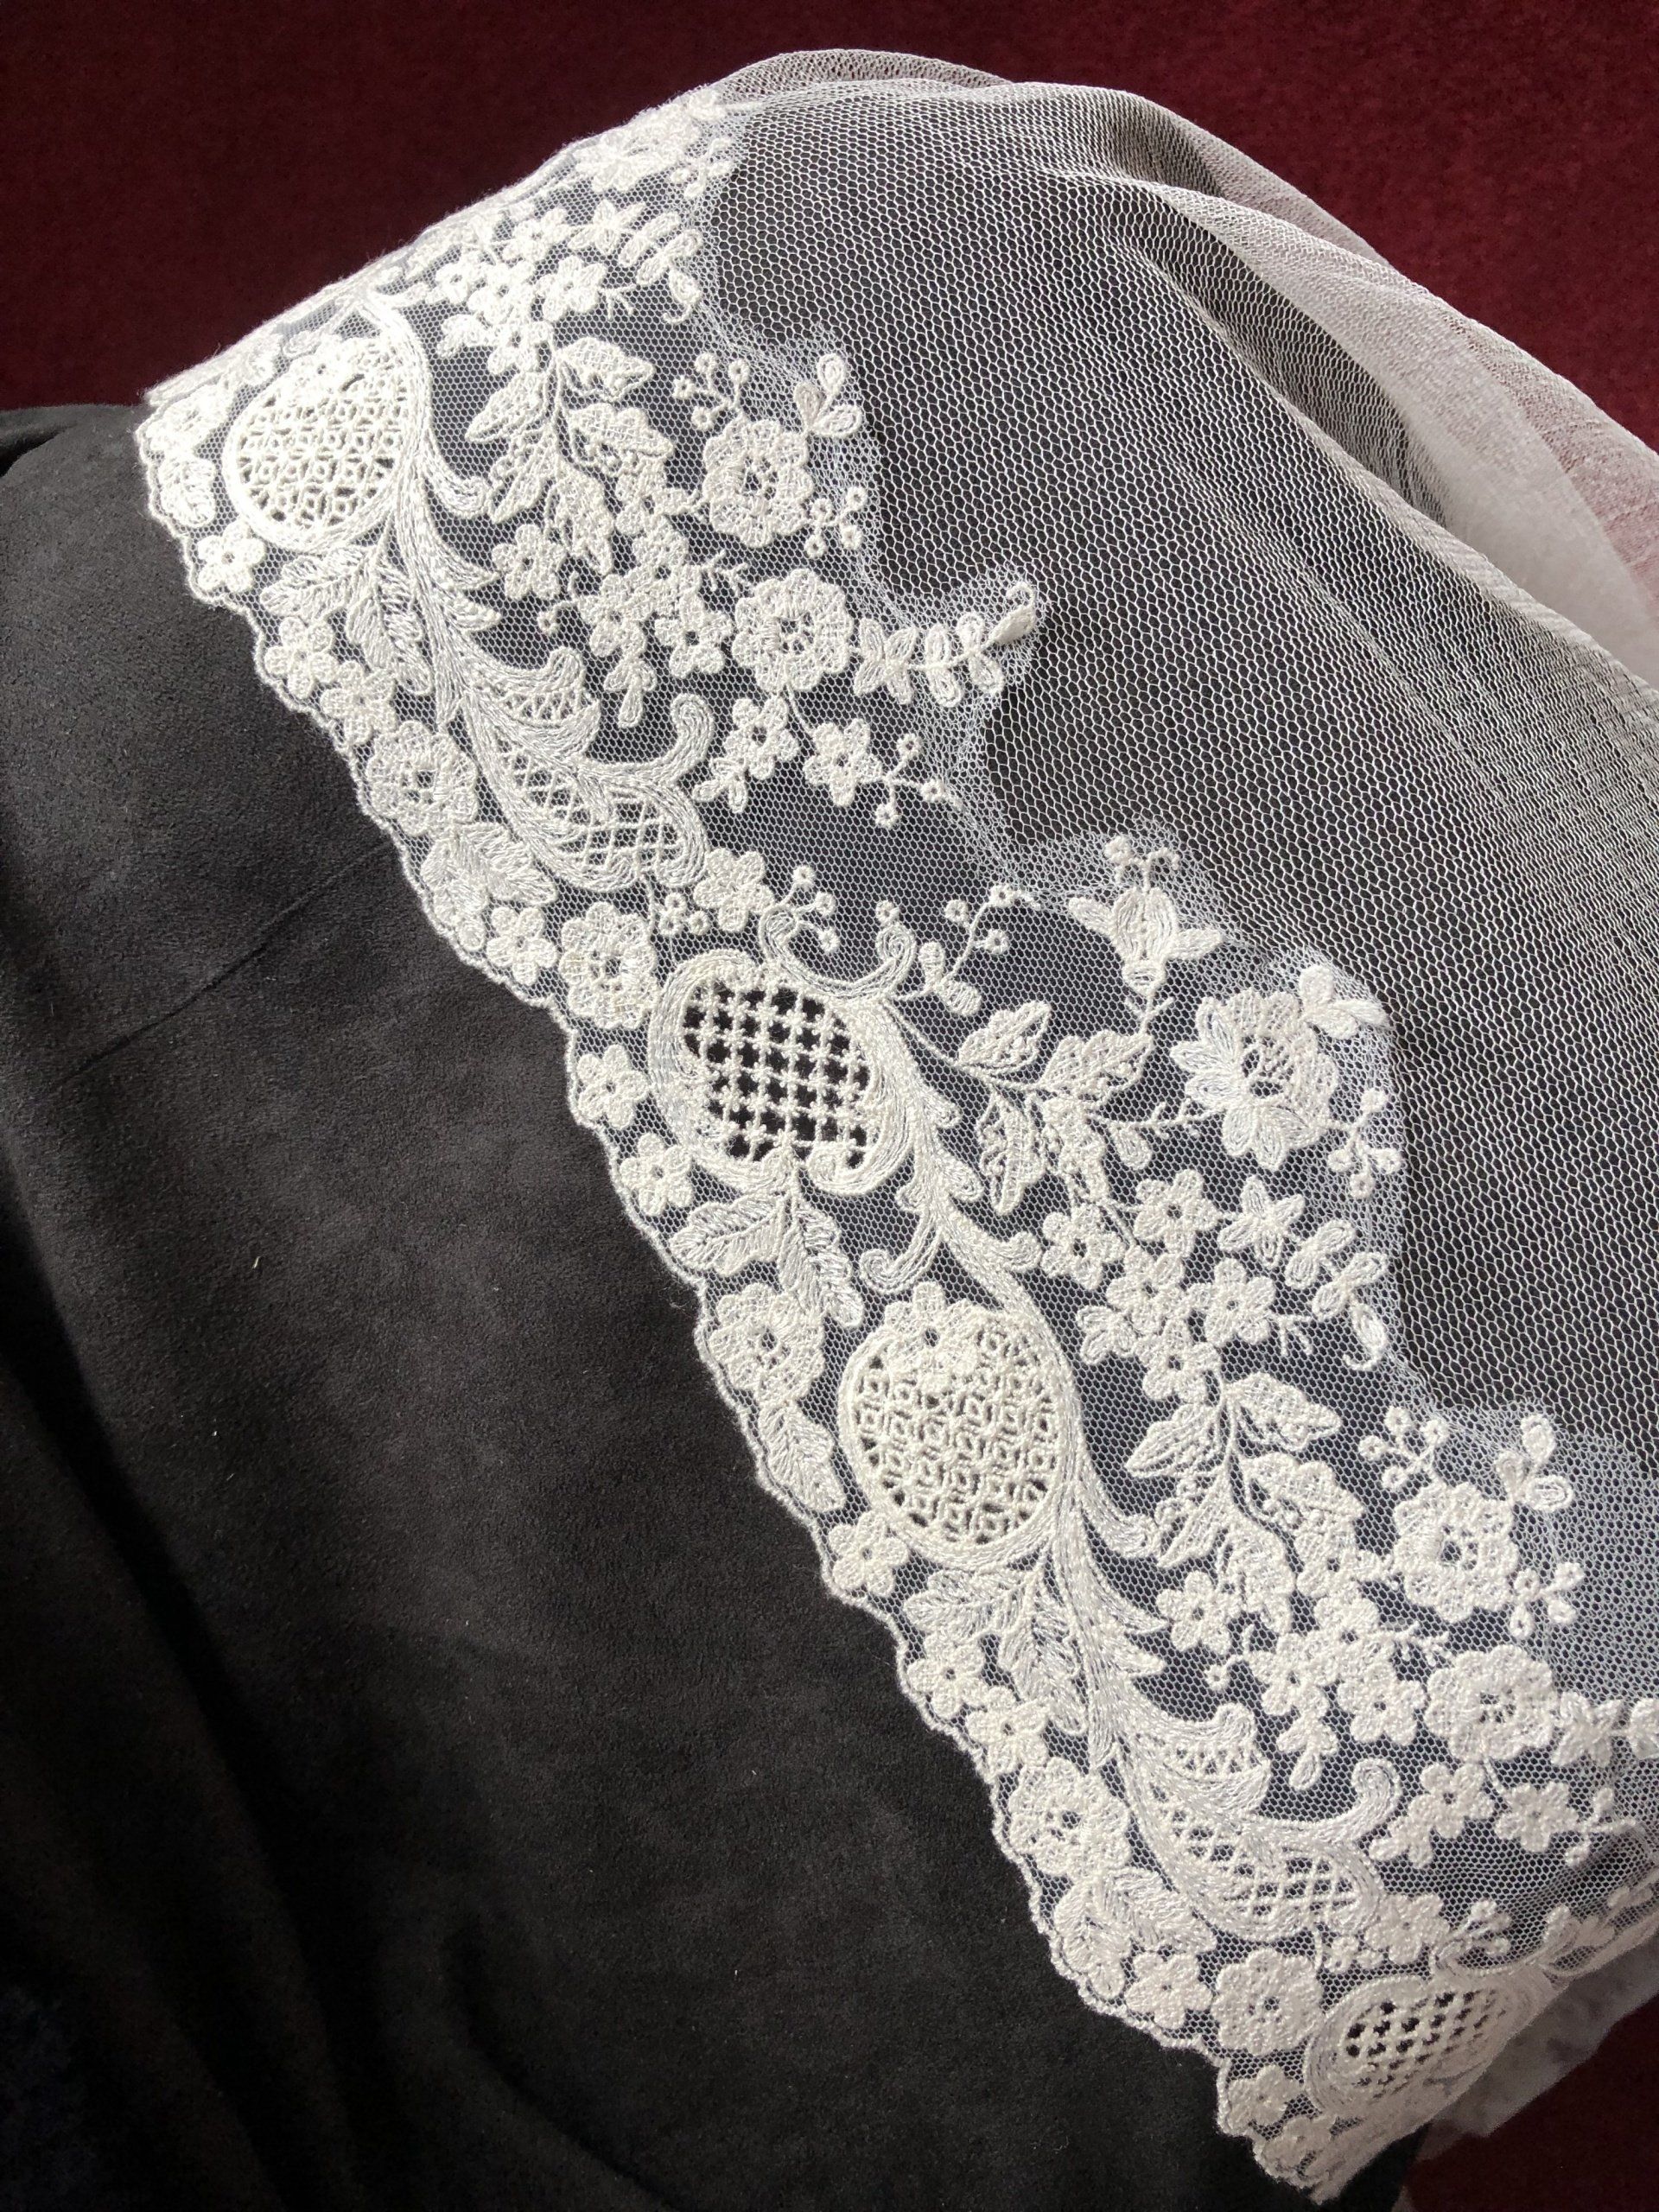 Silk tulle & lace veil